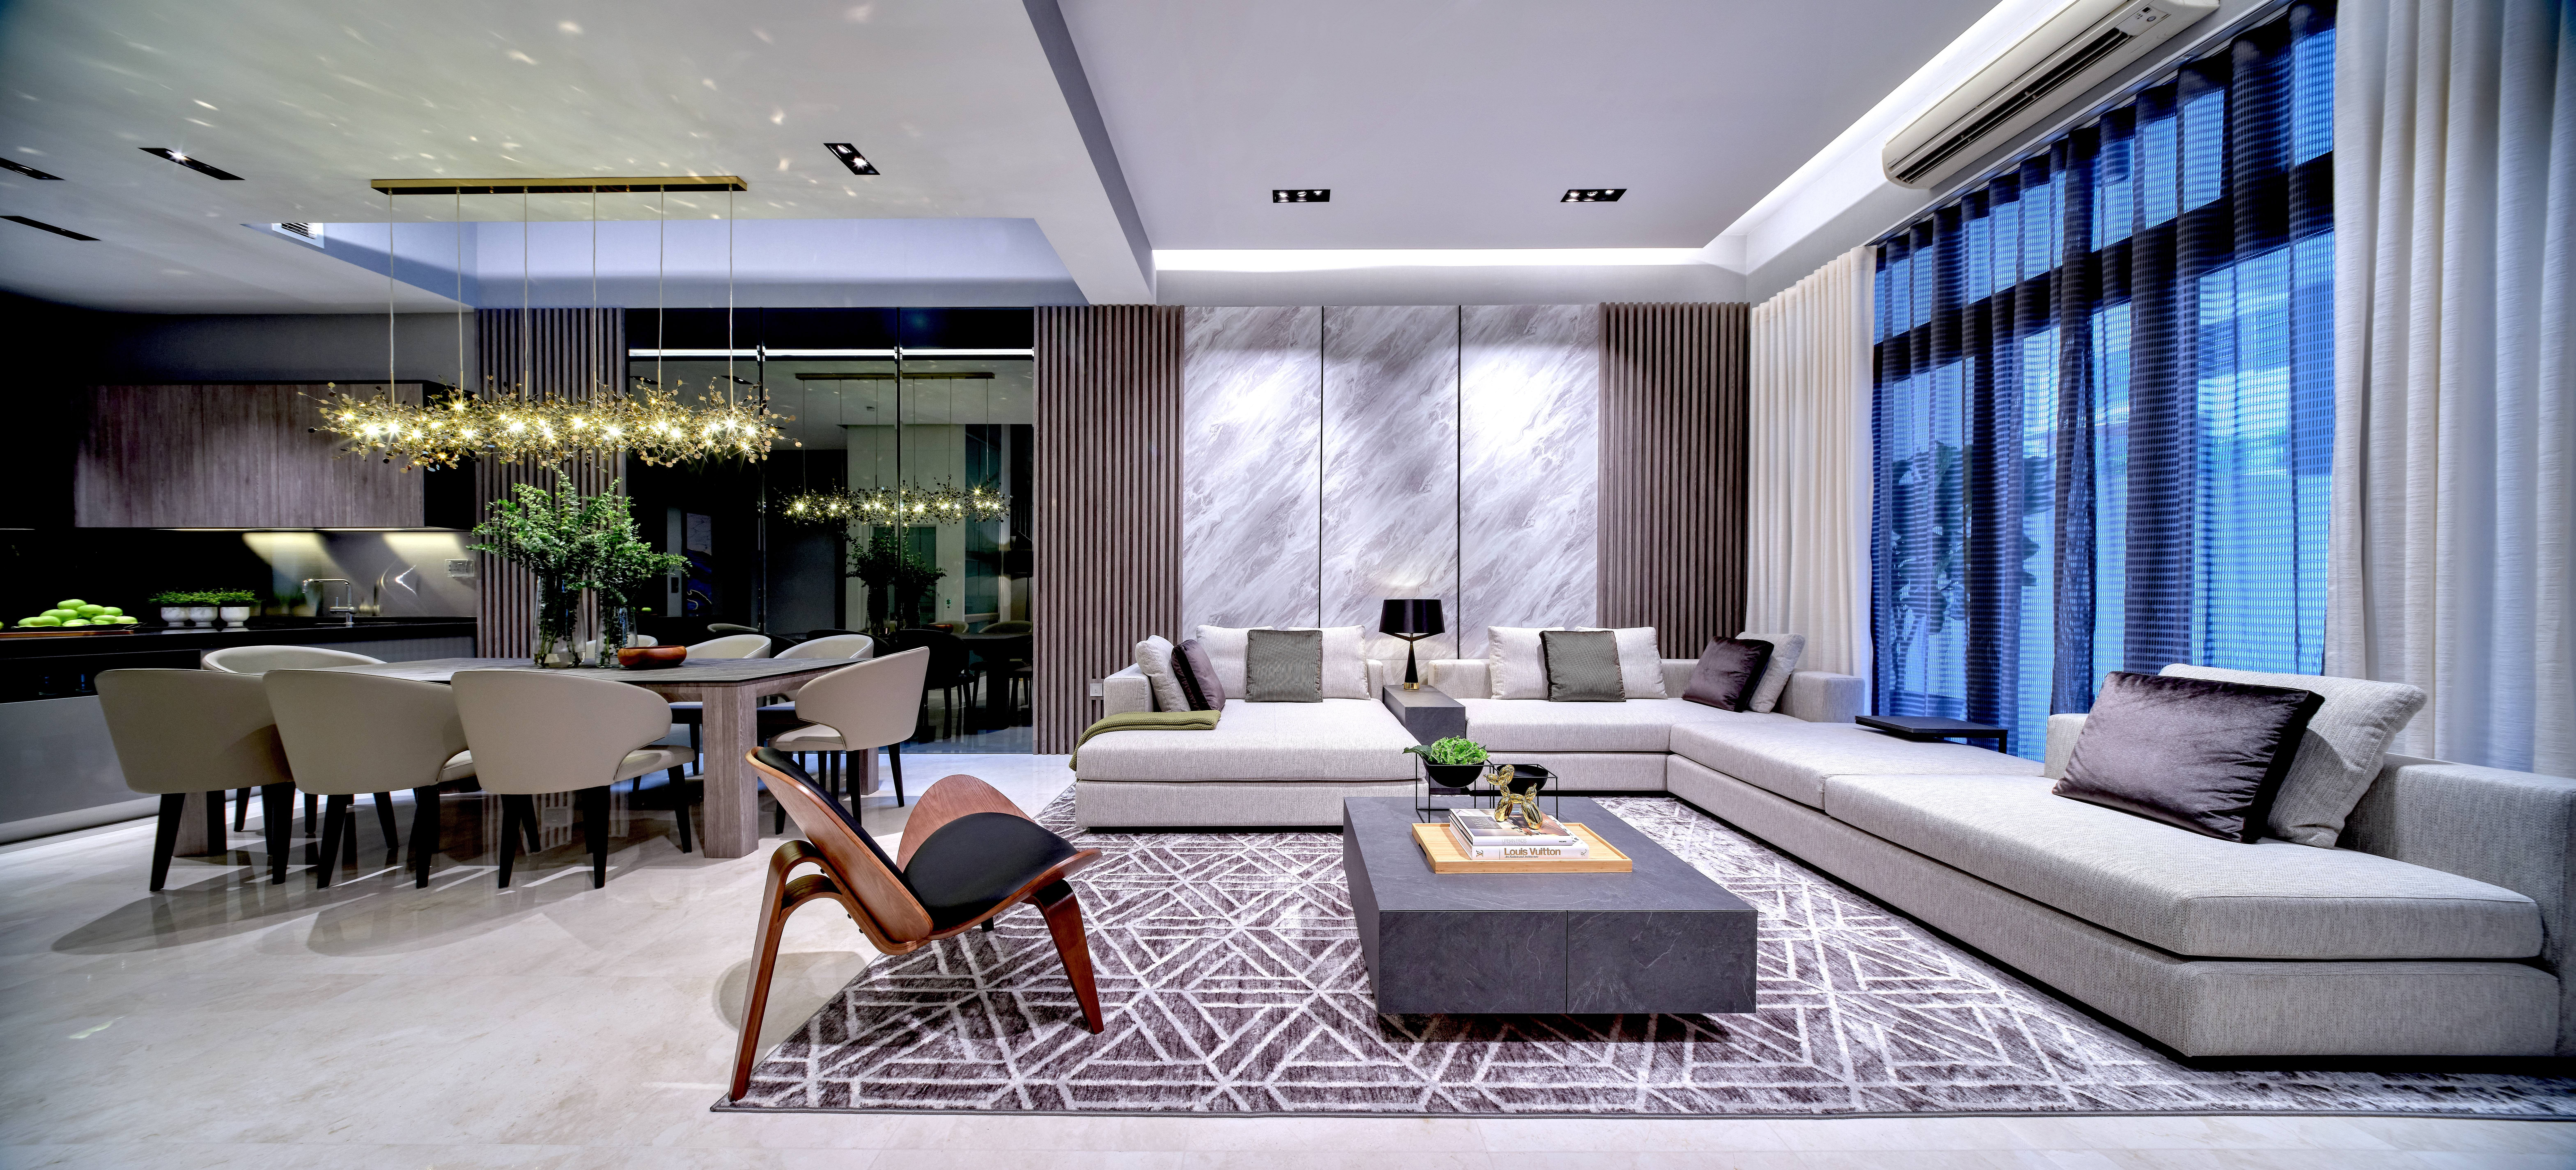 luxe hotel house luxus tour drive terrace bespoke furnishings hill living decor singapore